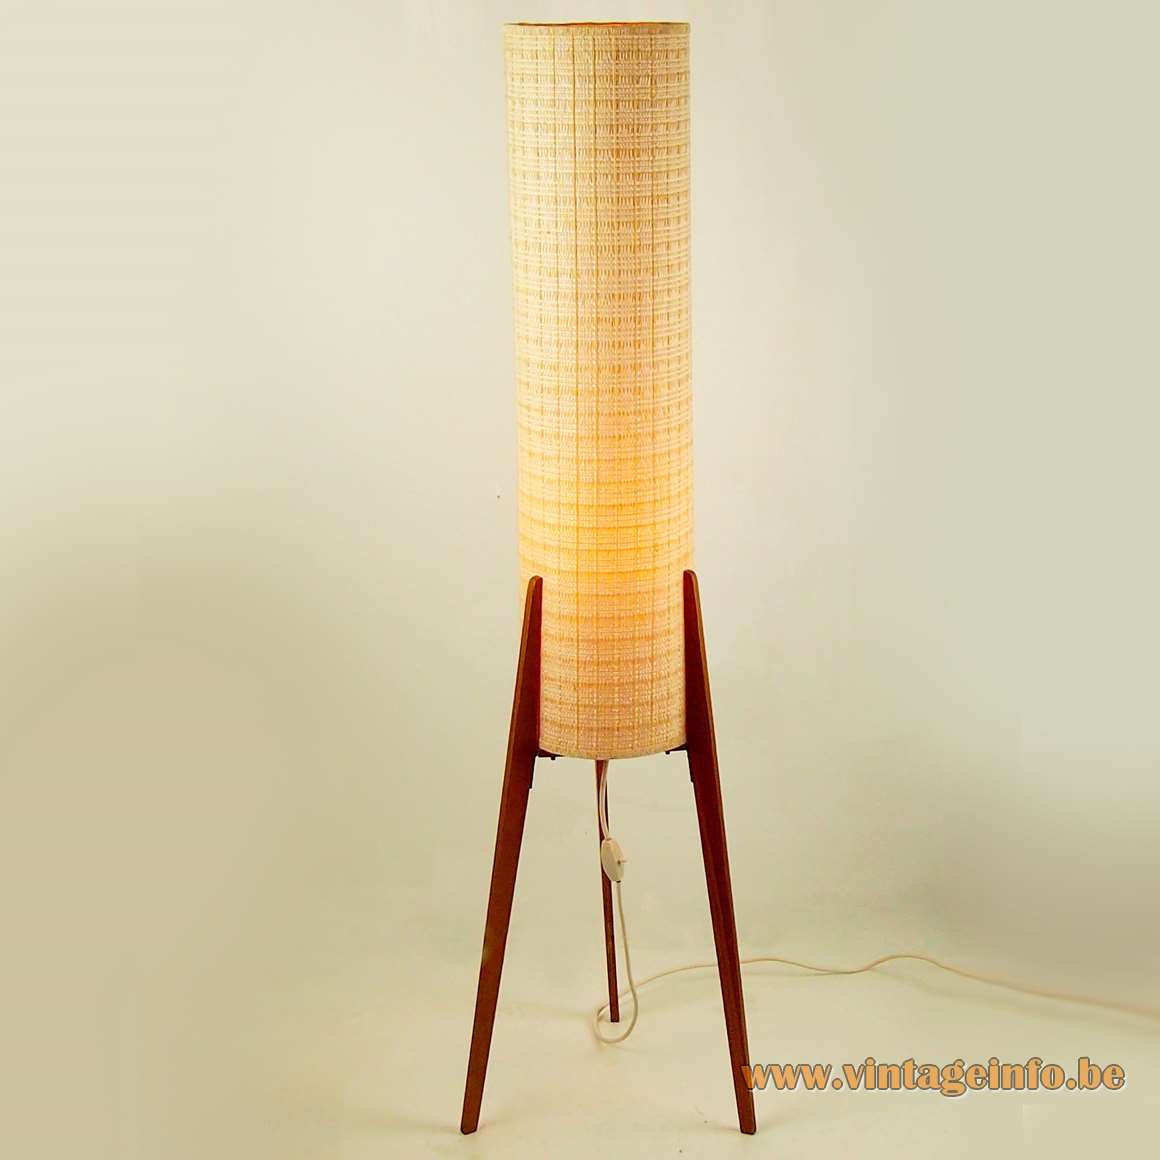 Leclaire & Schäfer rocket floor lamp pine wood tripod legs fabric tubular lampshade 1960s Germany E27 socket